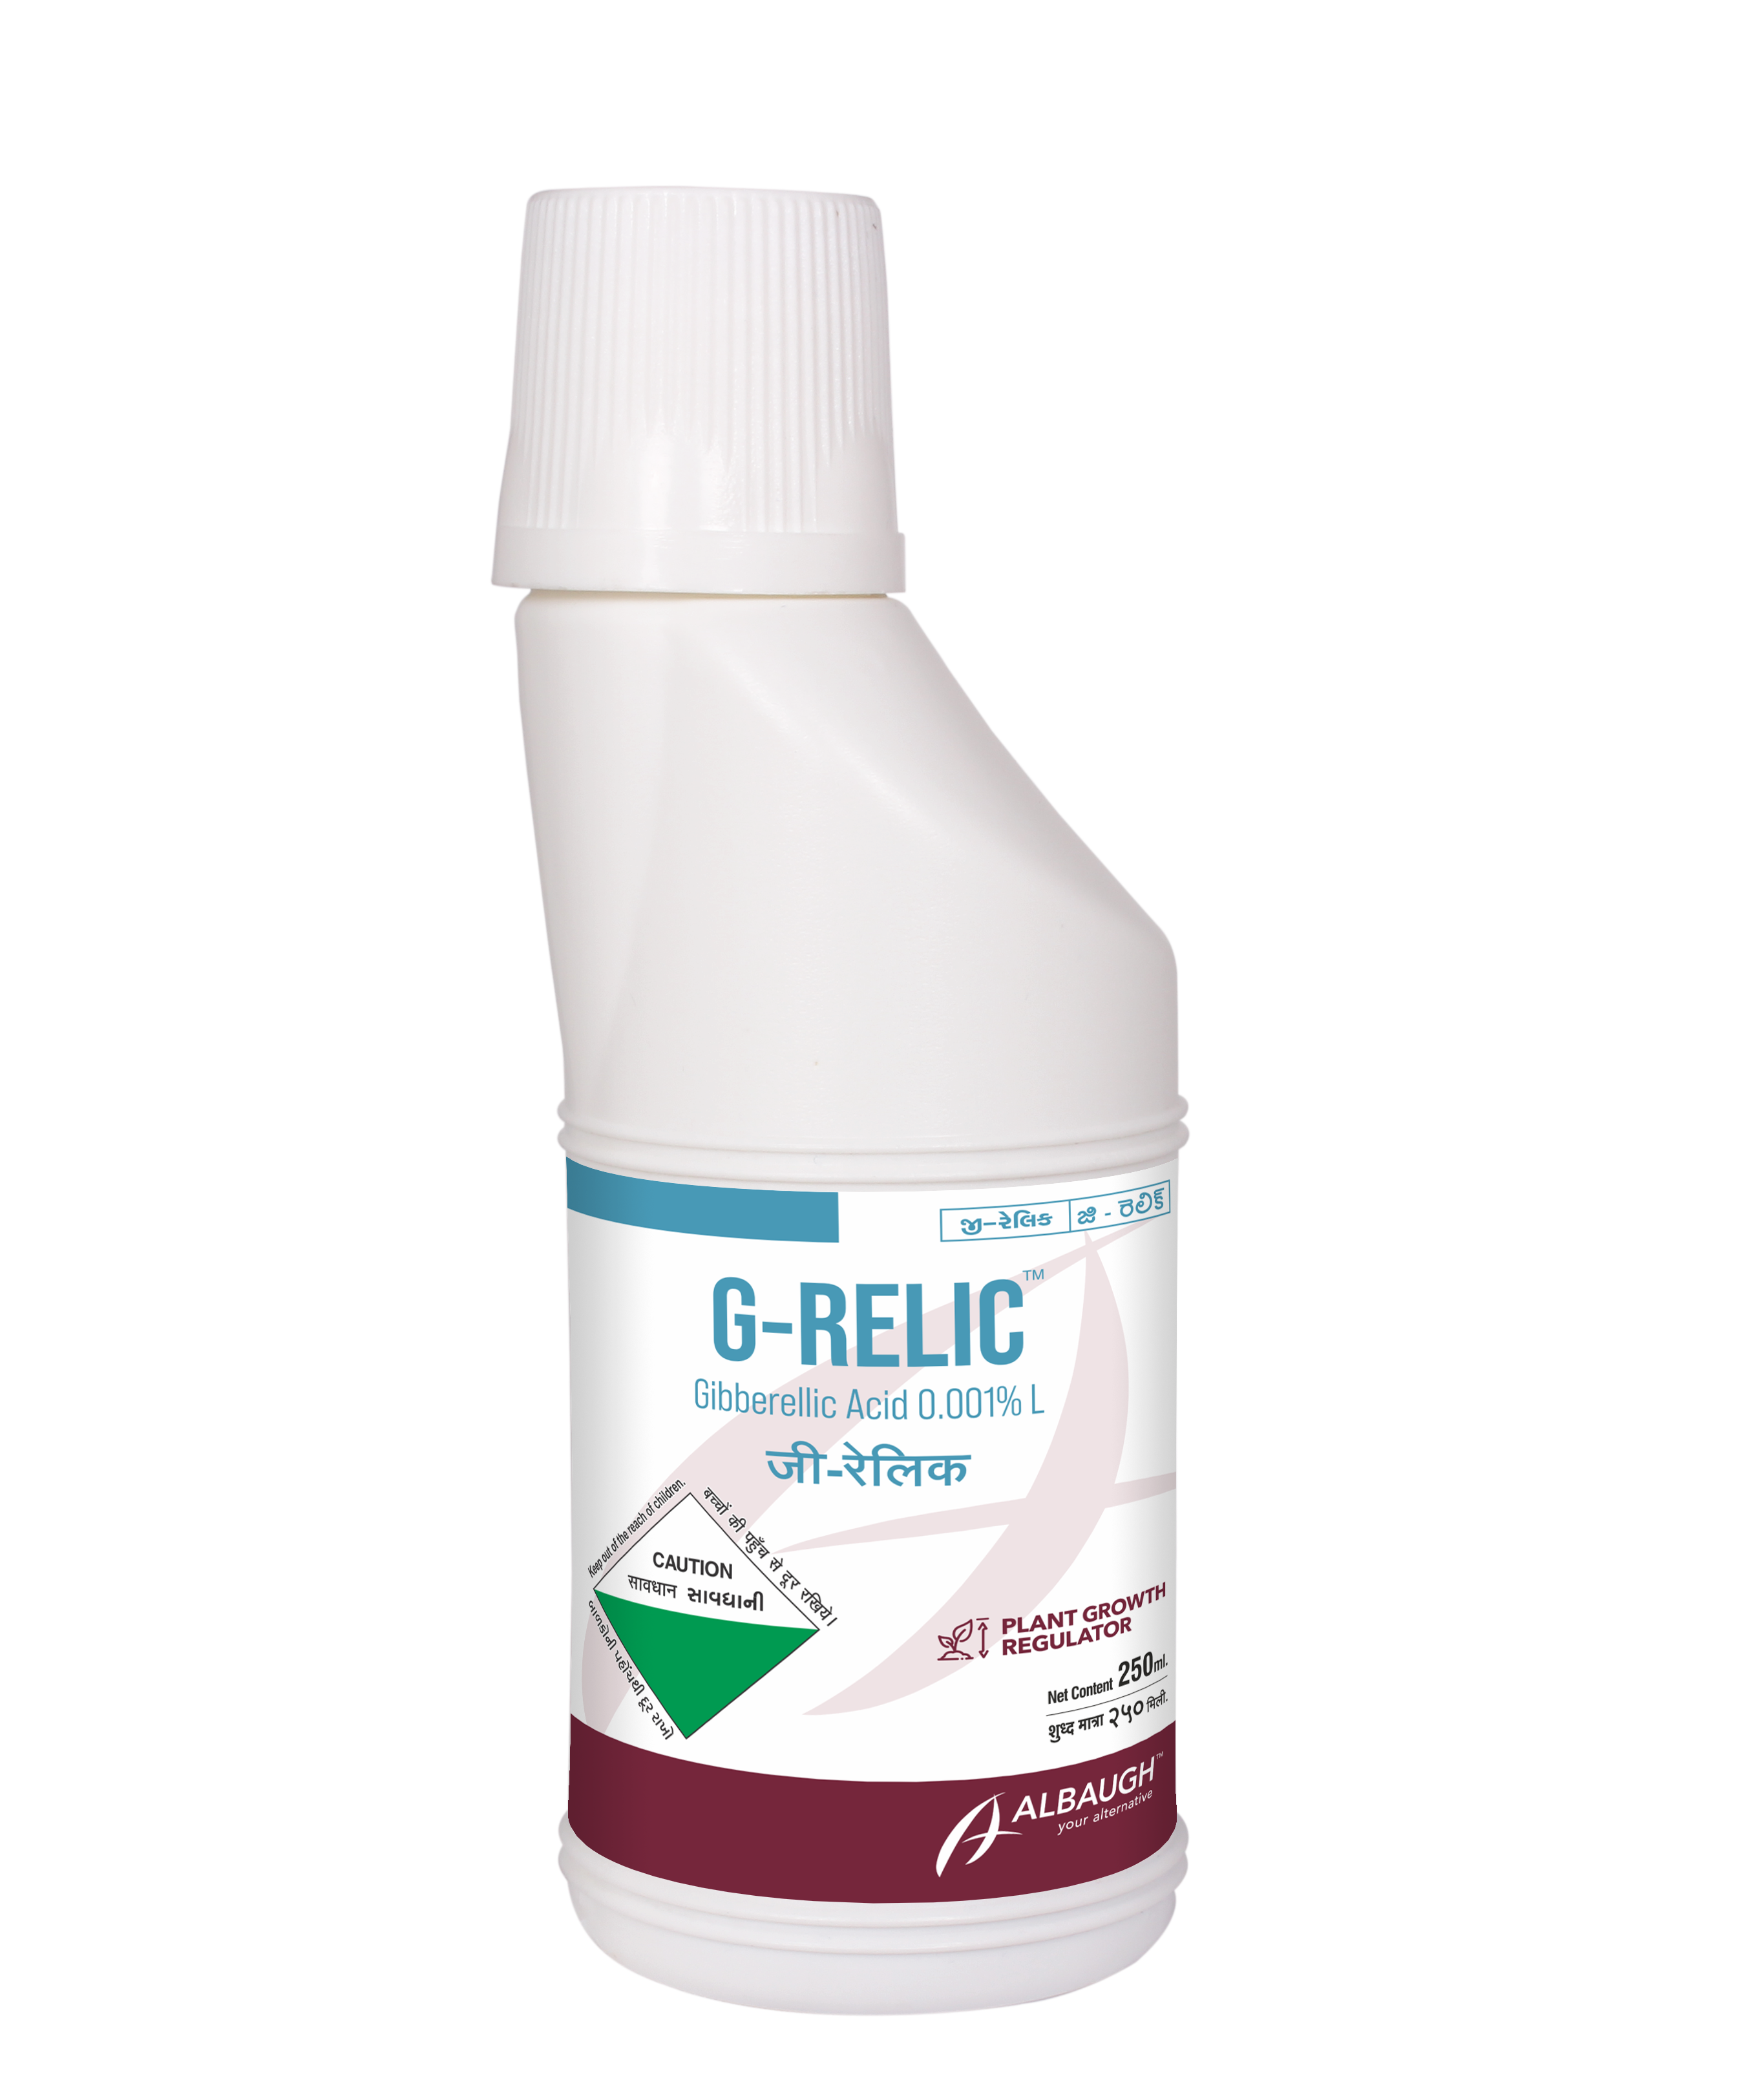 G-Relic: Gibberellic Acid 0.001% L